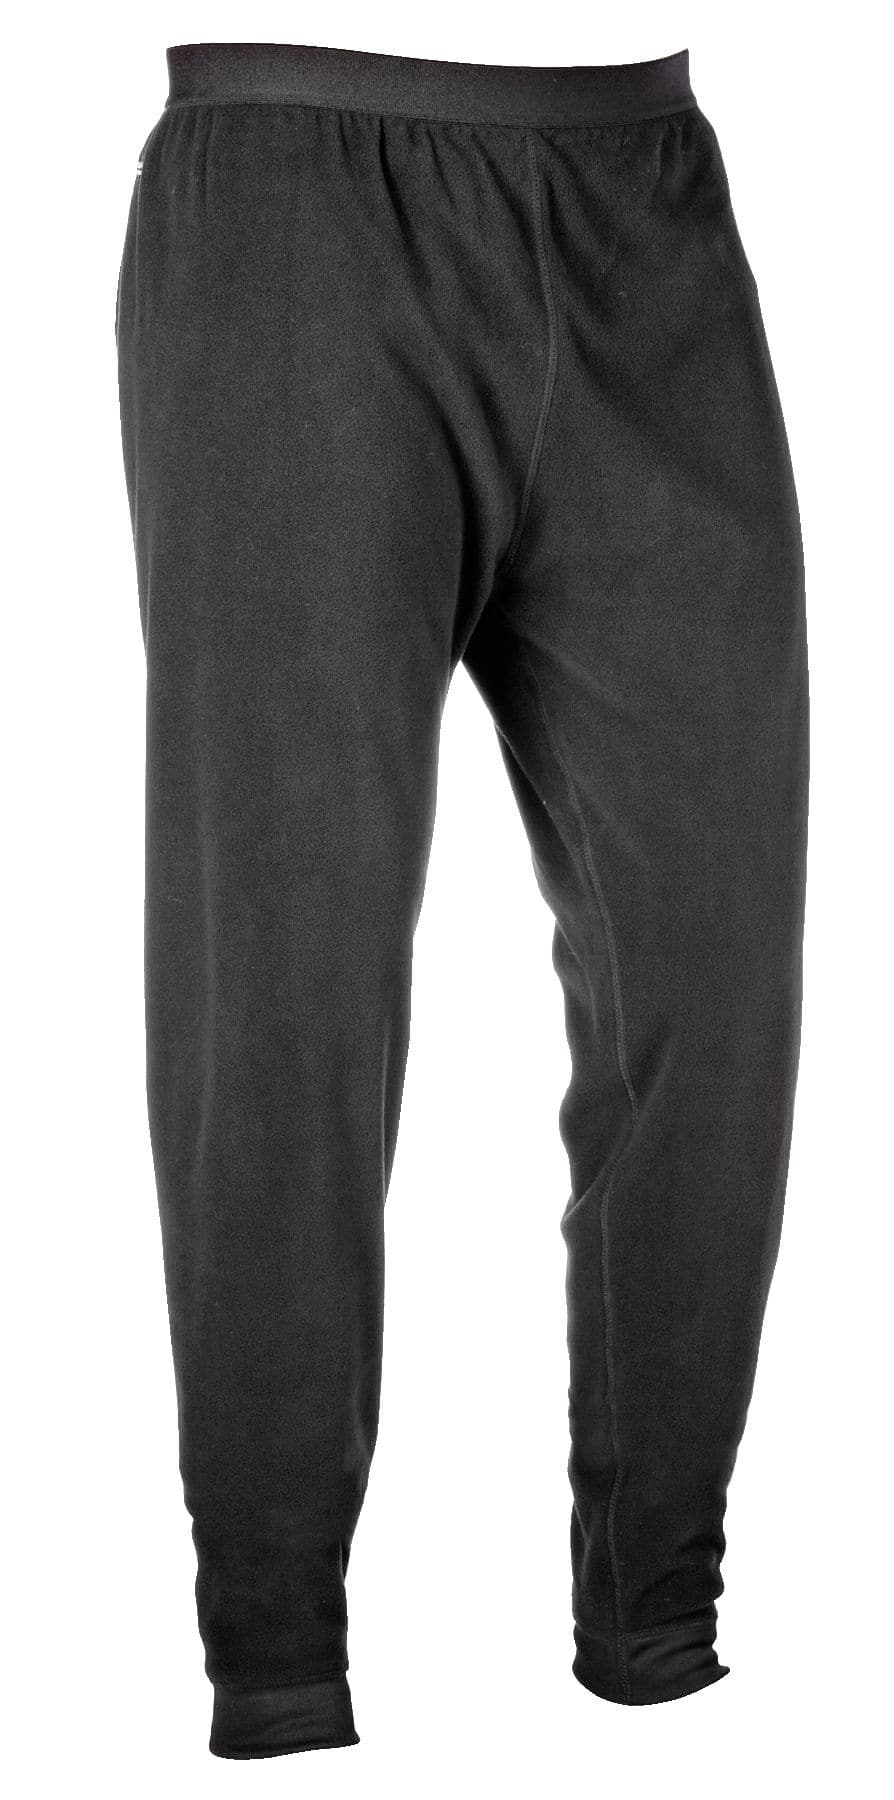 Men's Stretch Thermaskin Long Underwear Pants Base Layer